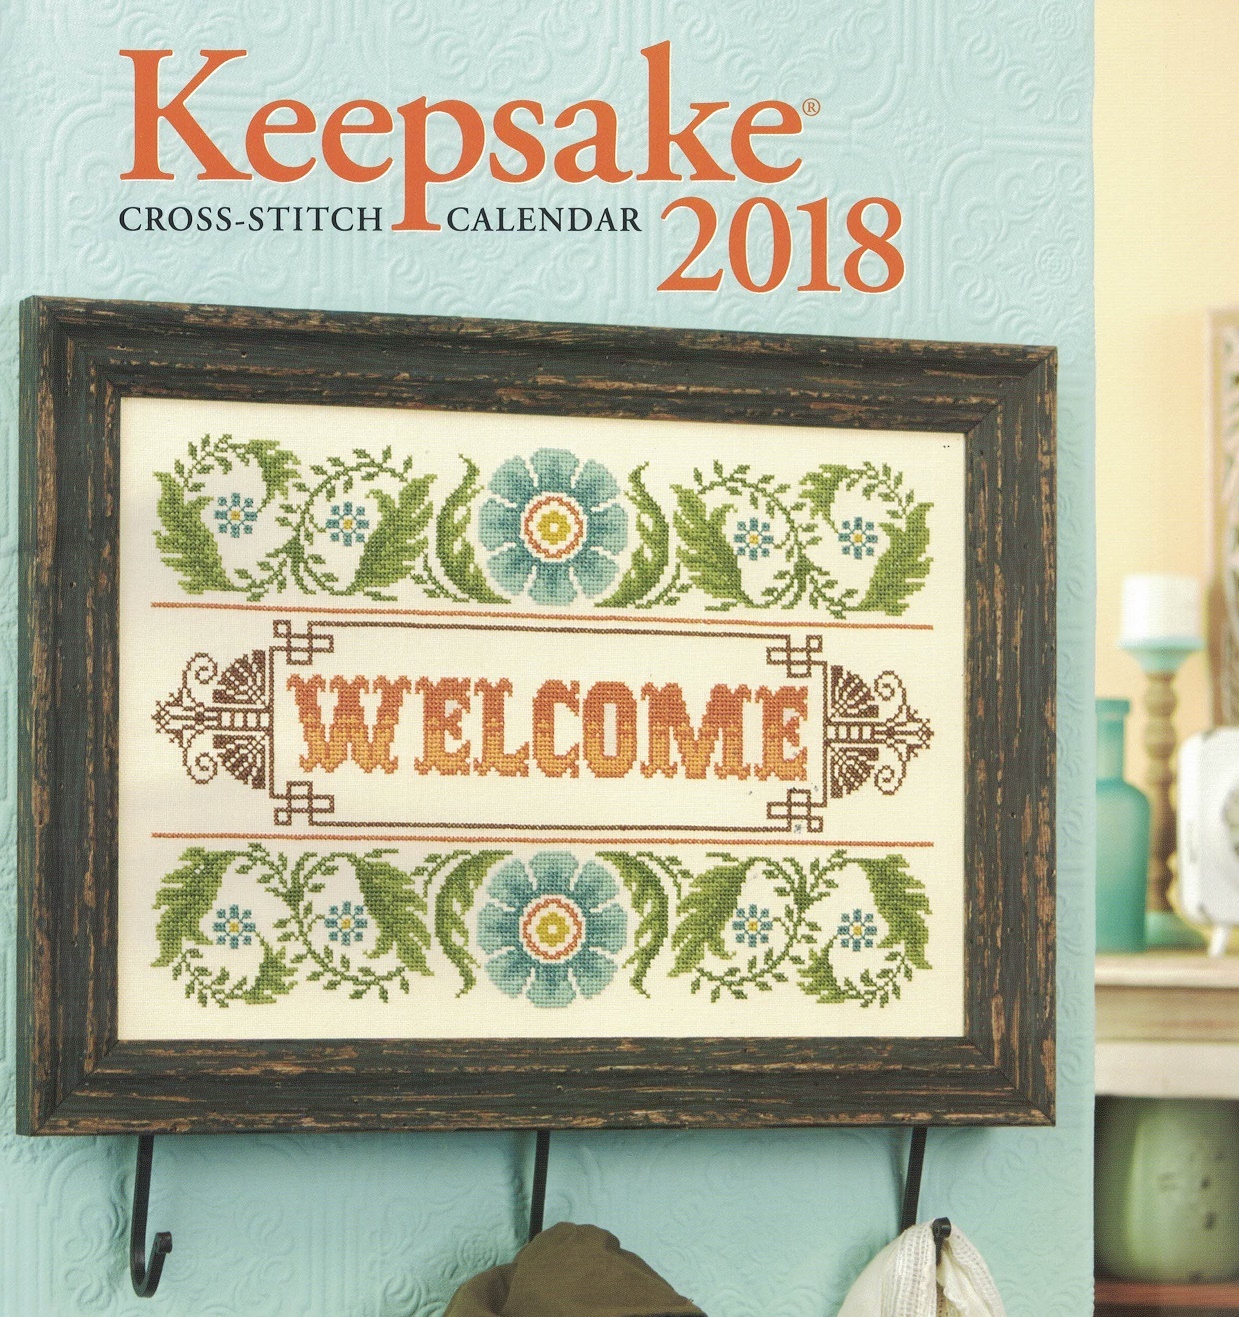 2018 Keepsake Cross Stitch Calendar from Craftways - Other